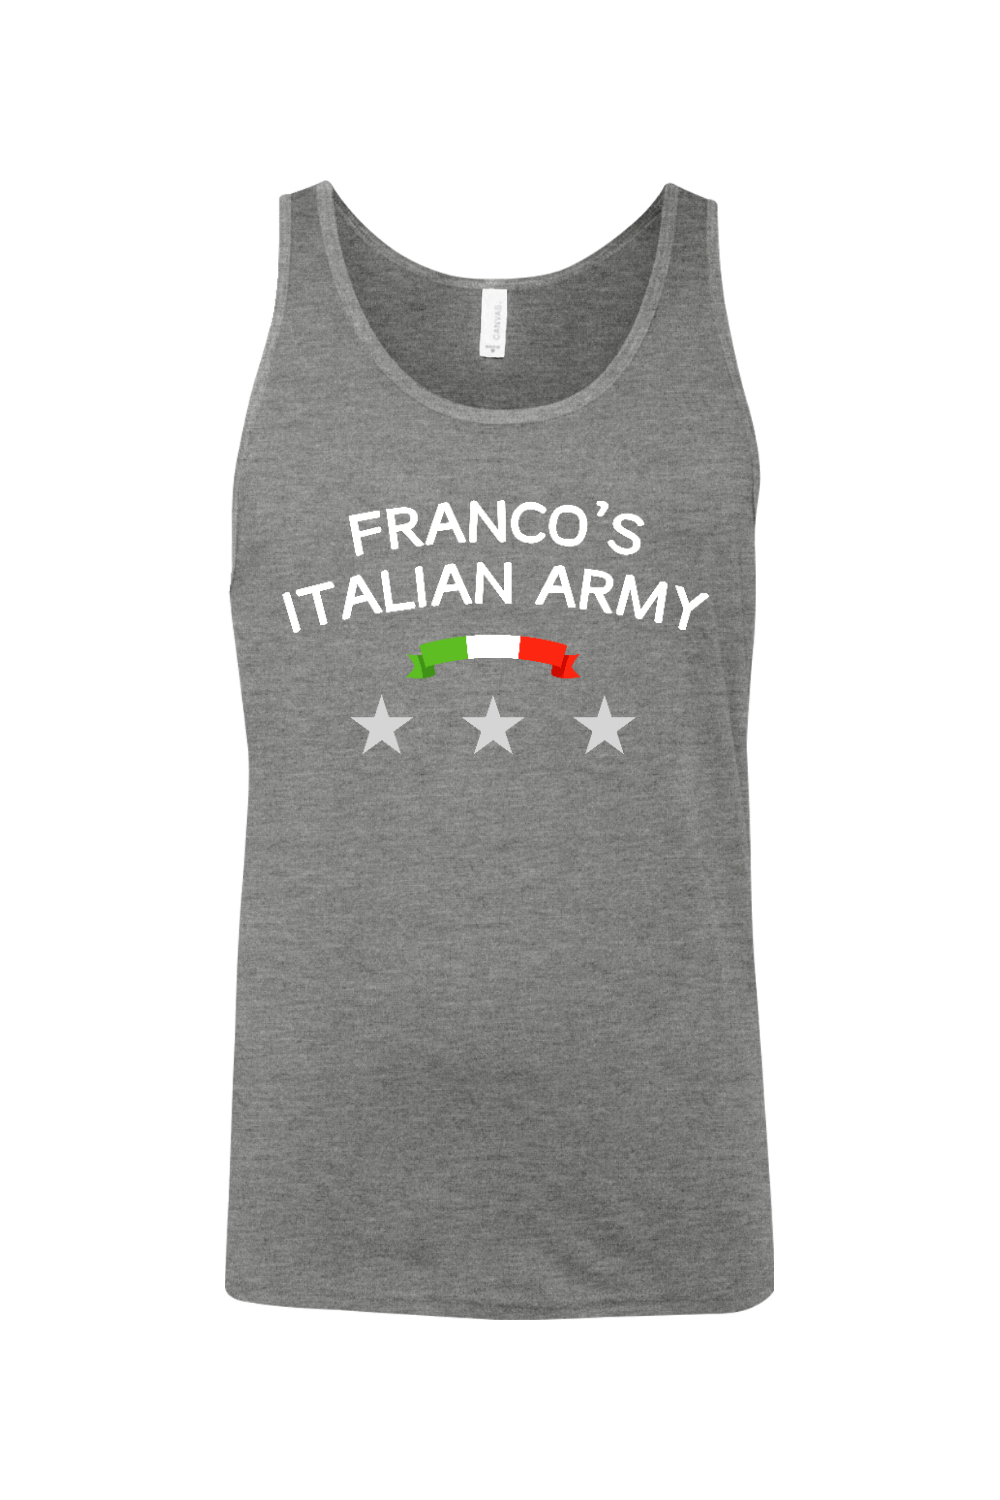 Franco's Italian Army - Unisex Jersey Tank - Yinzylvania